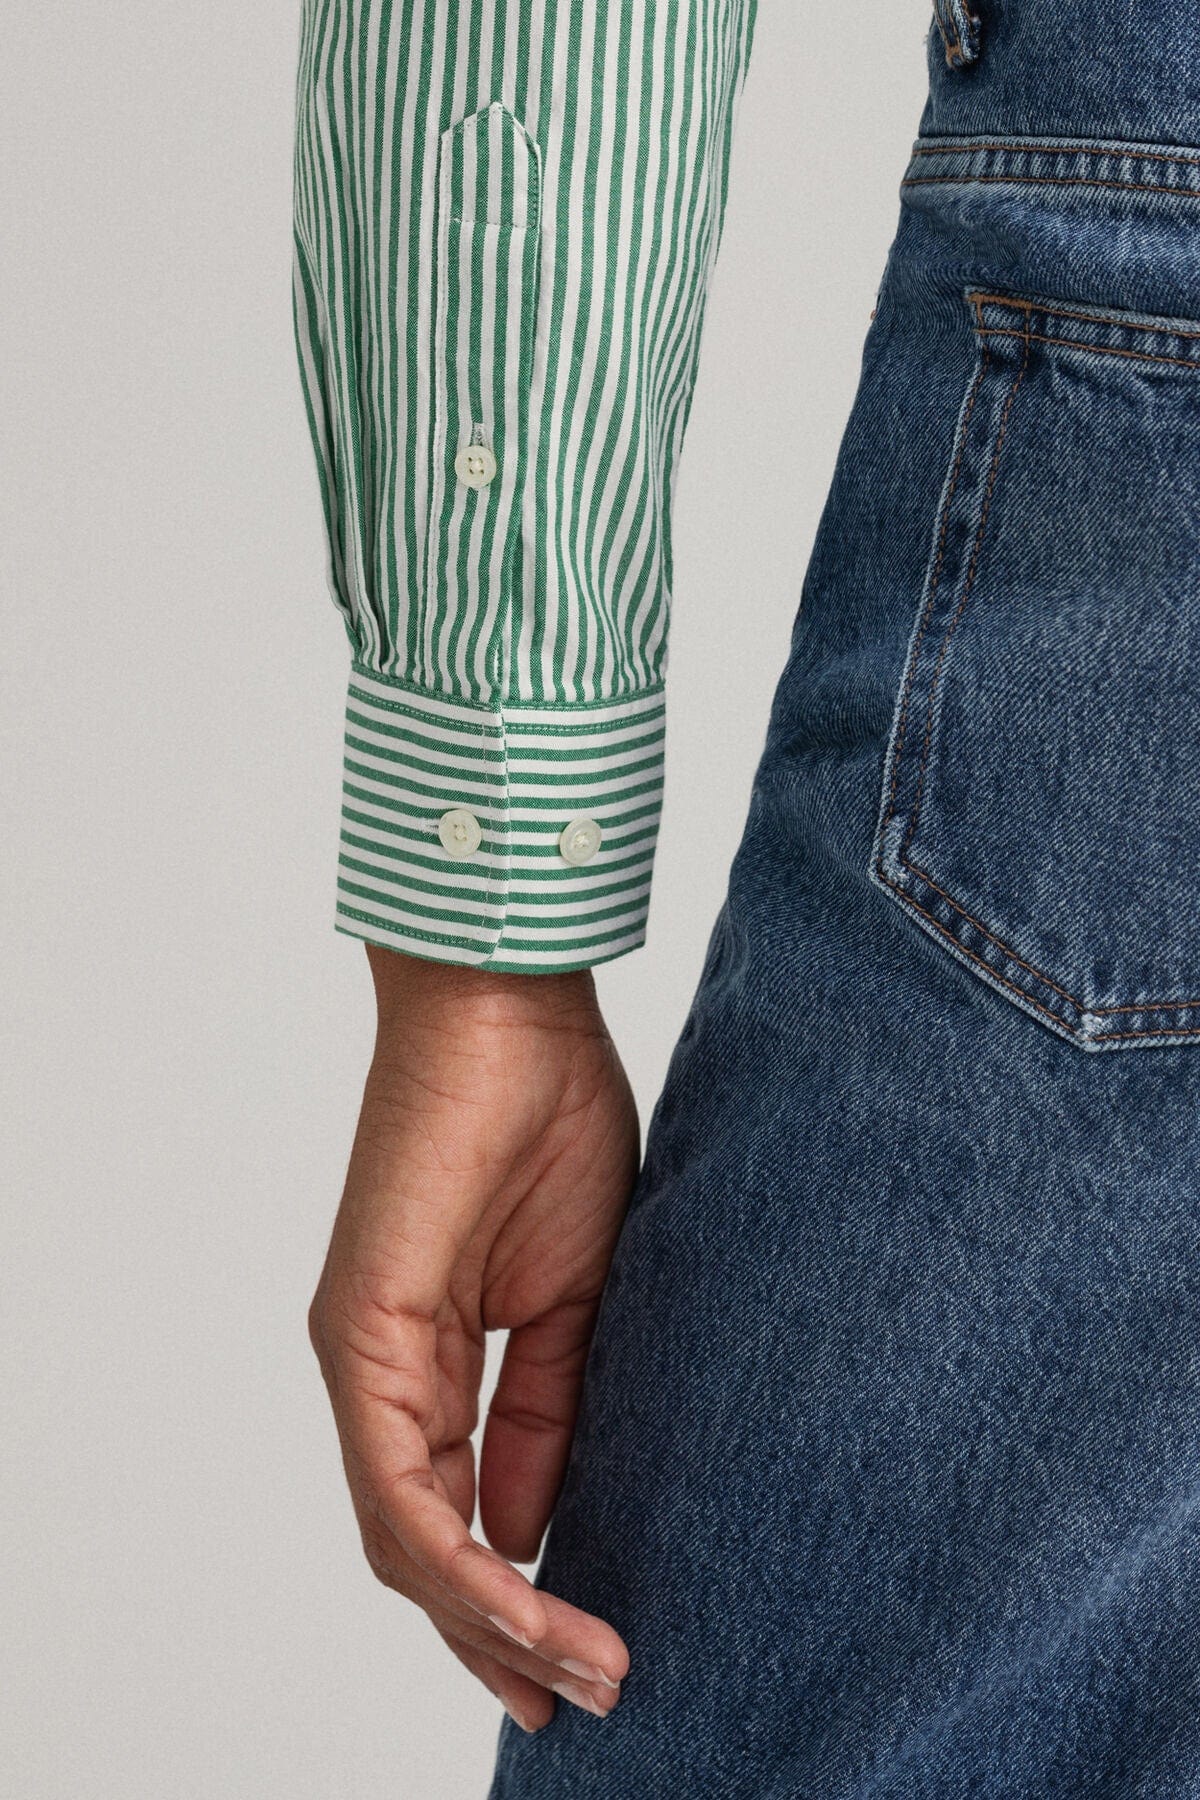 GANT Garment Washed Stripe Oxford Shirt - Lavish Green